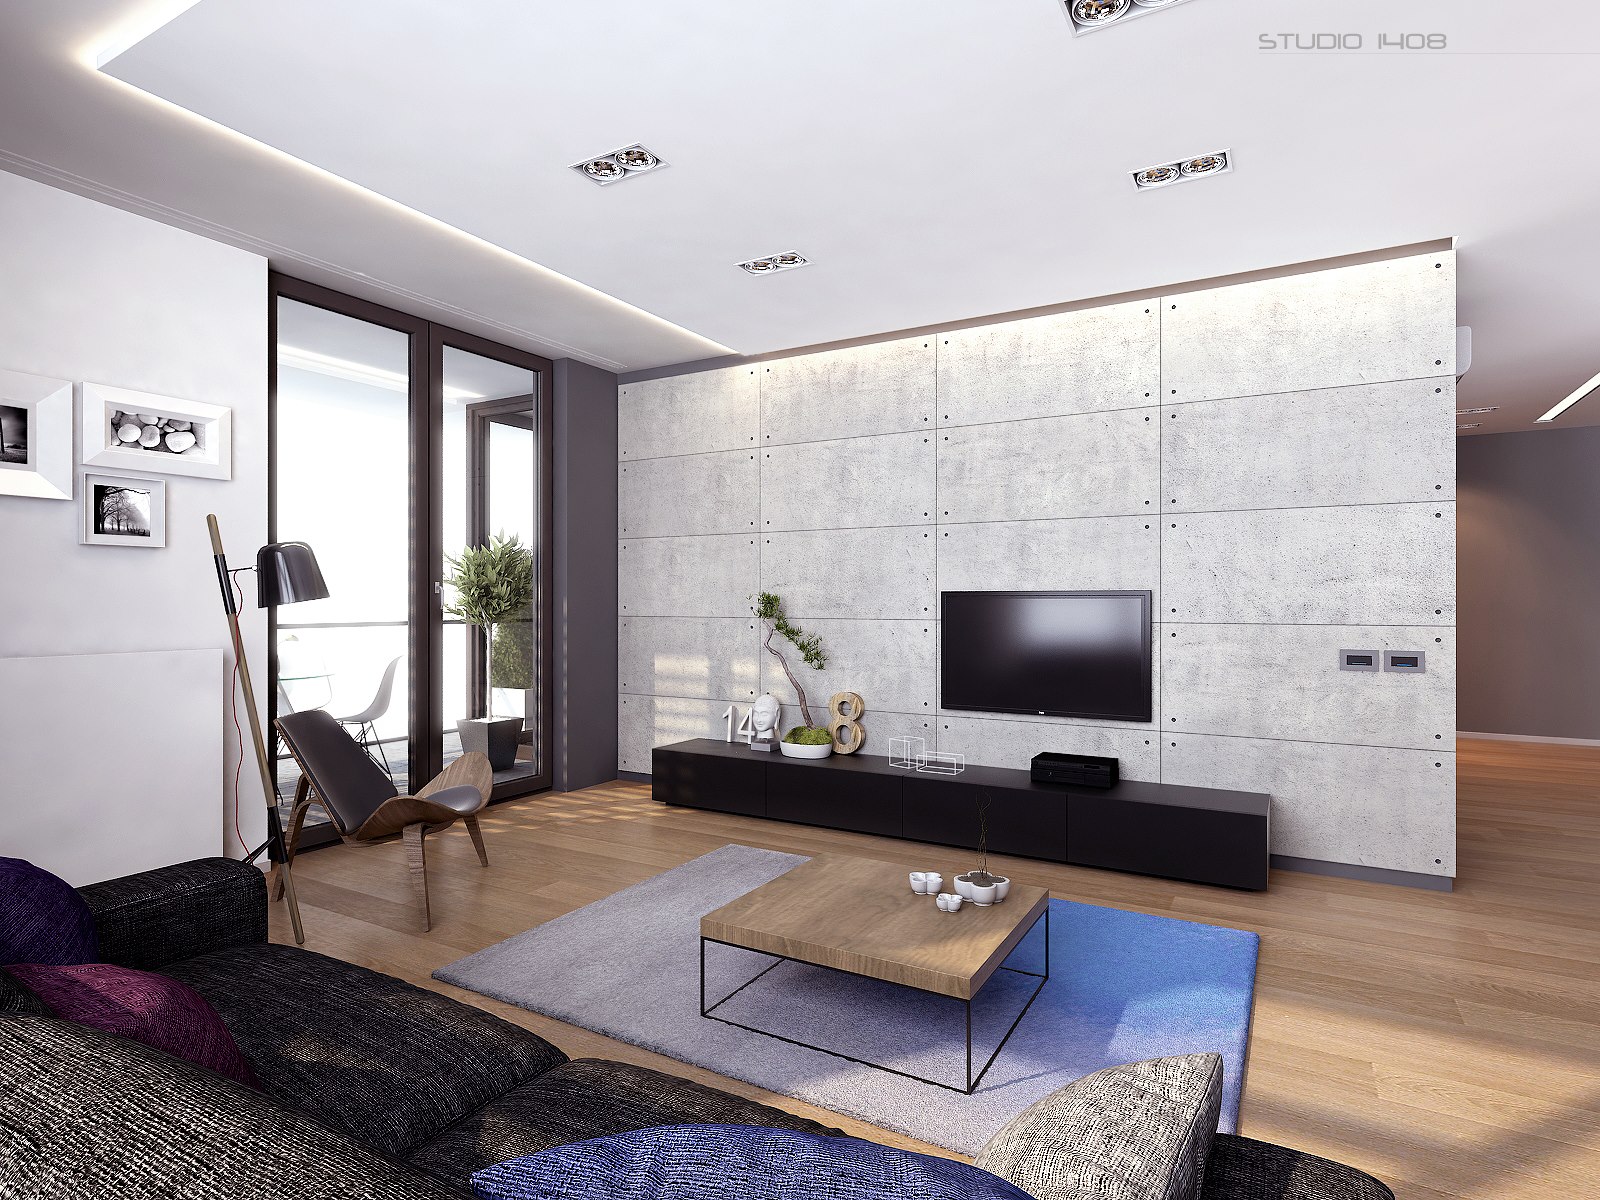 Dekorasi ruang tamu minimalis sederhana sesuai dengan lantai kayu